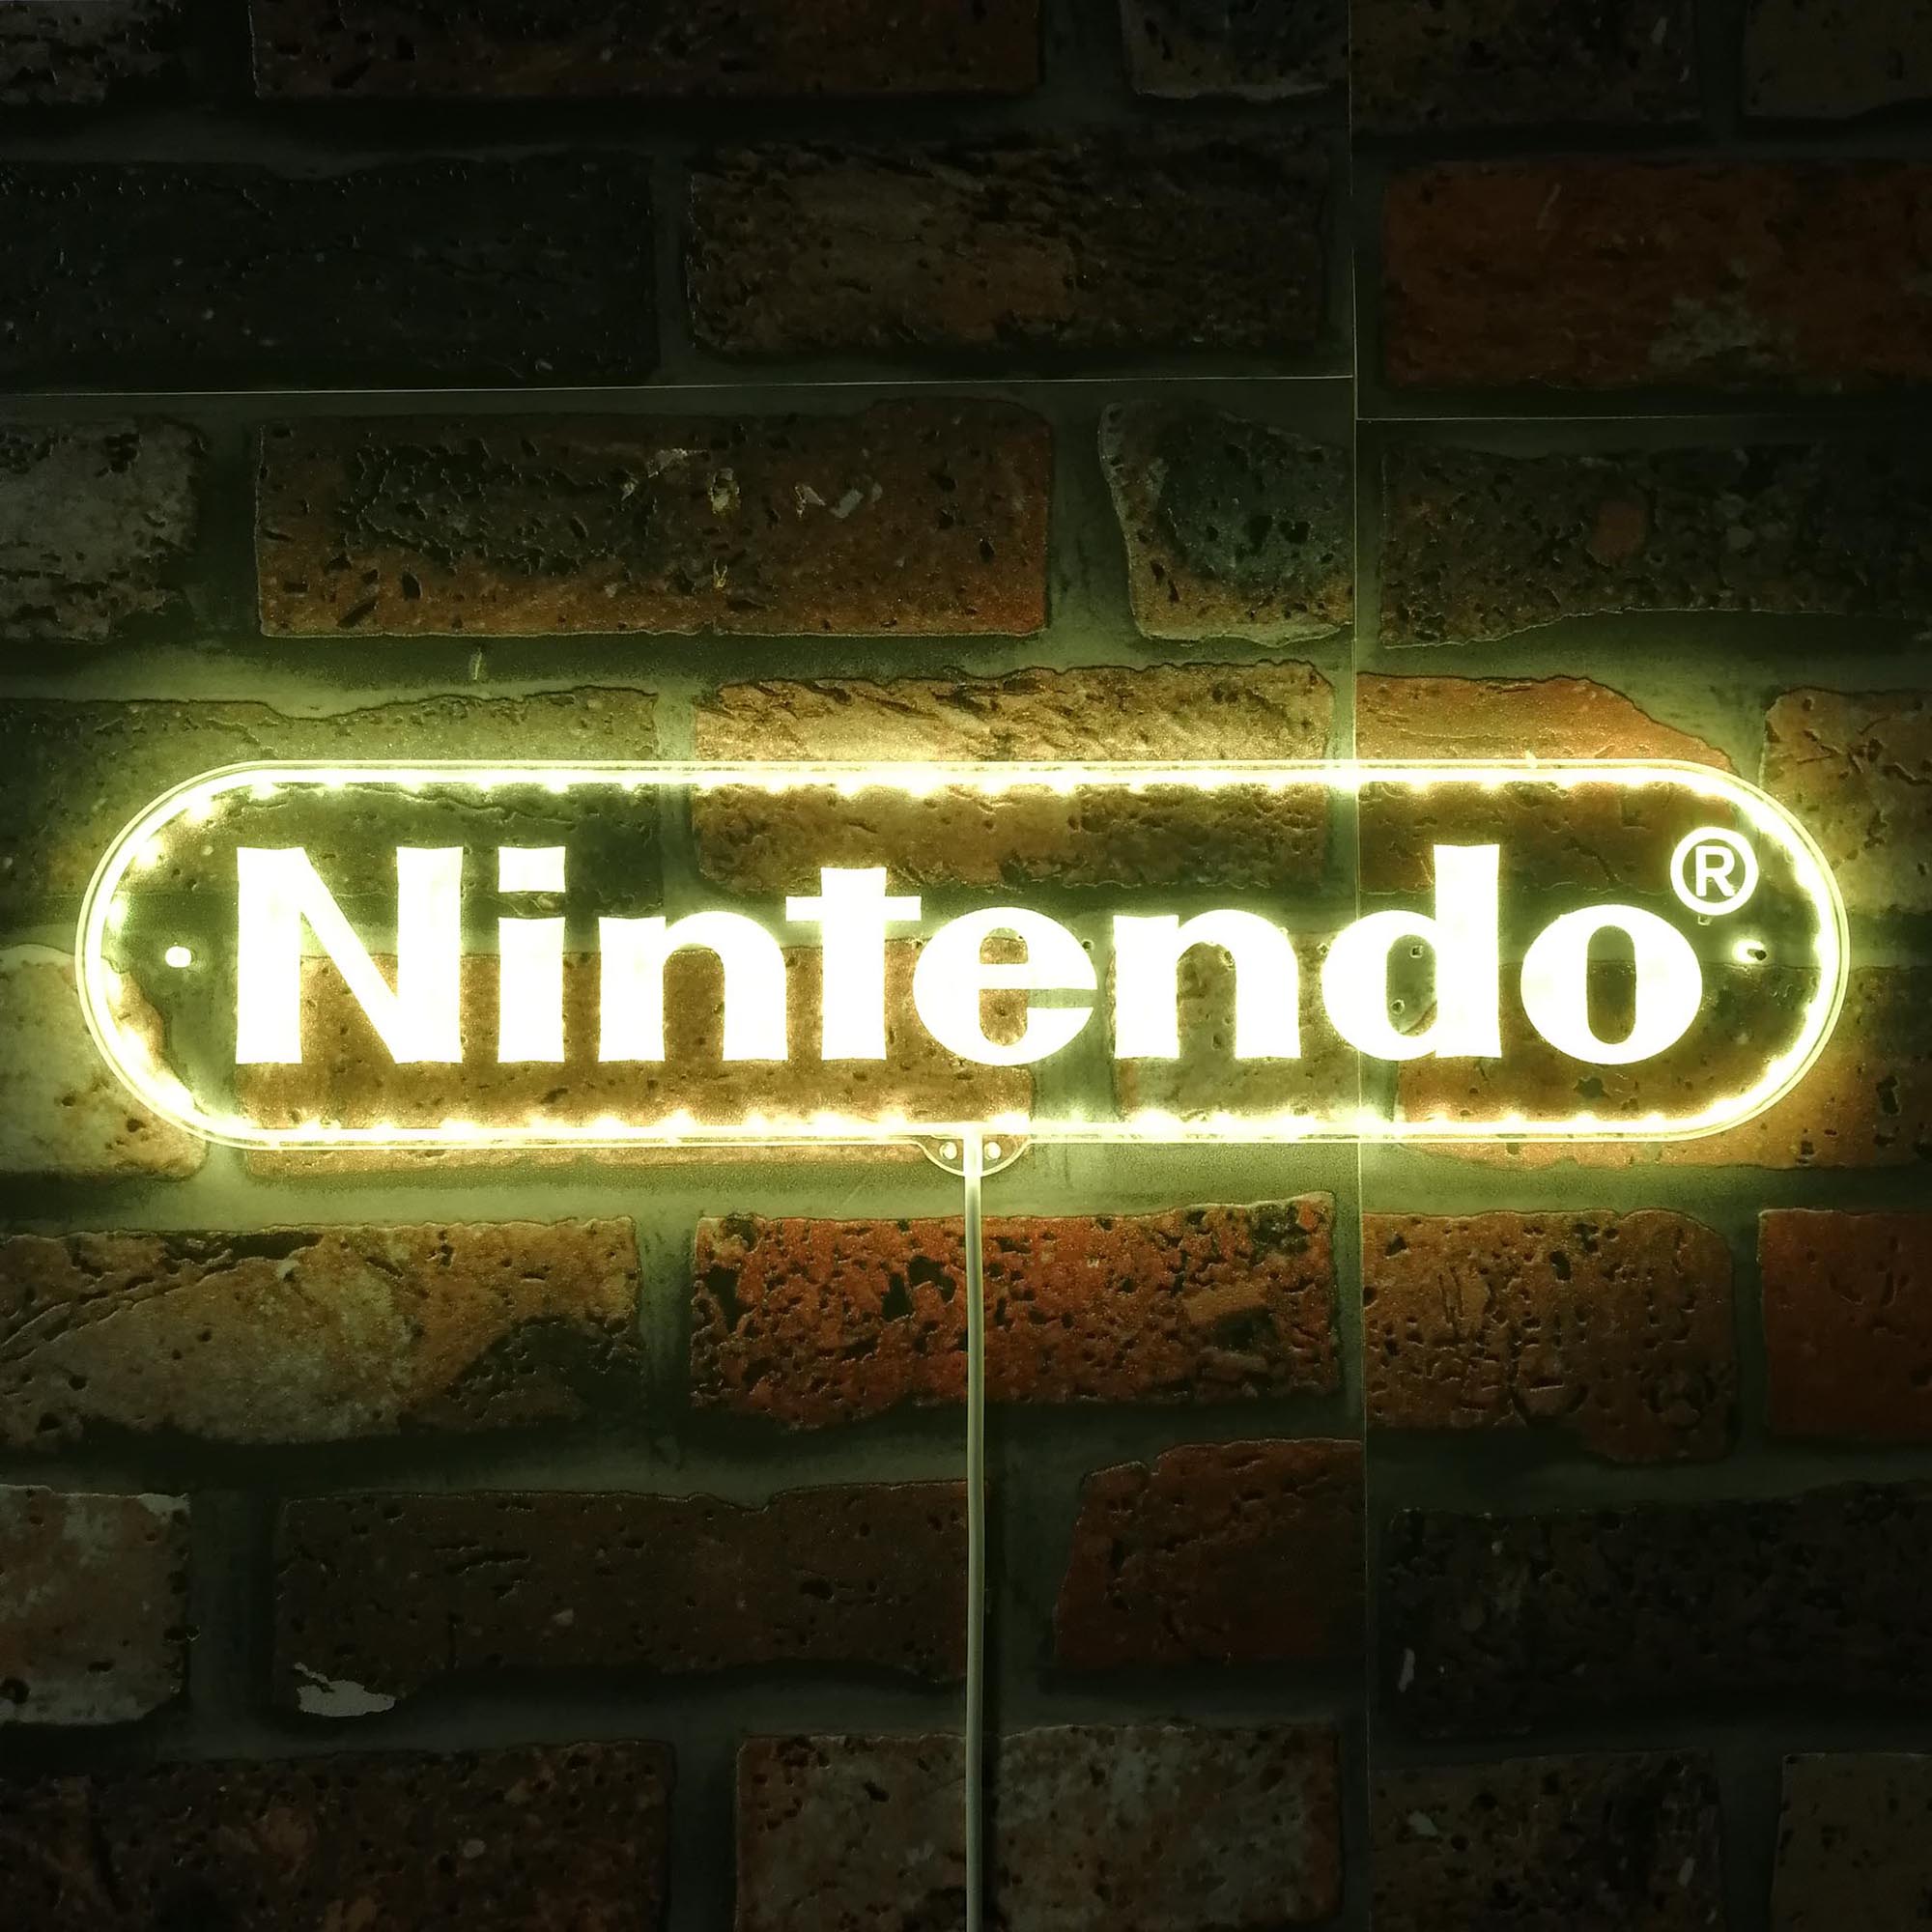 Nintendo Dynamic RGB Edge Lit LED Sign